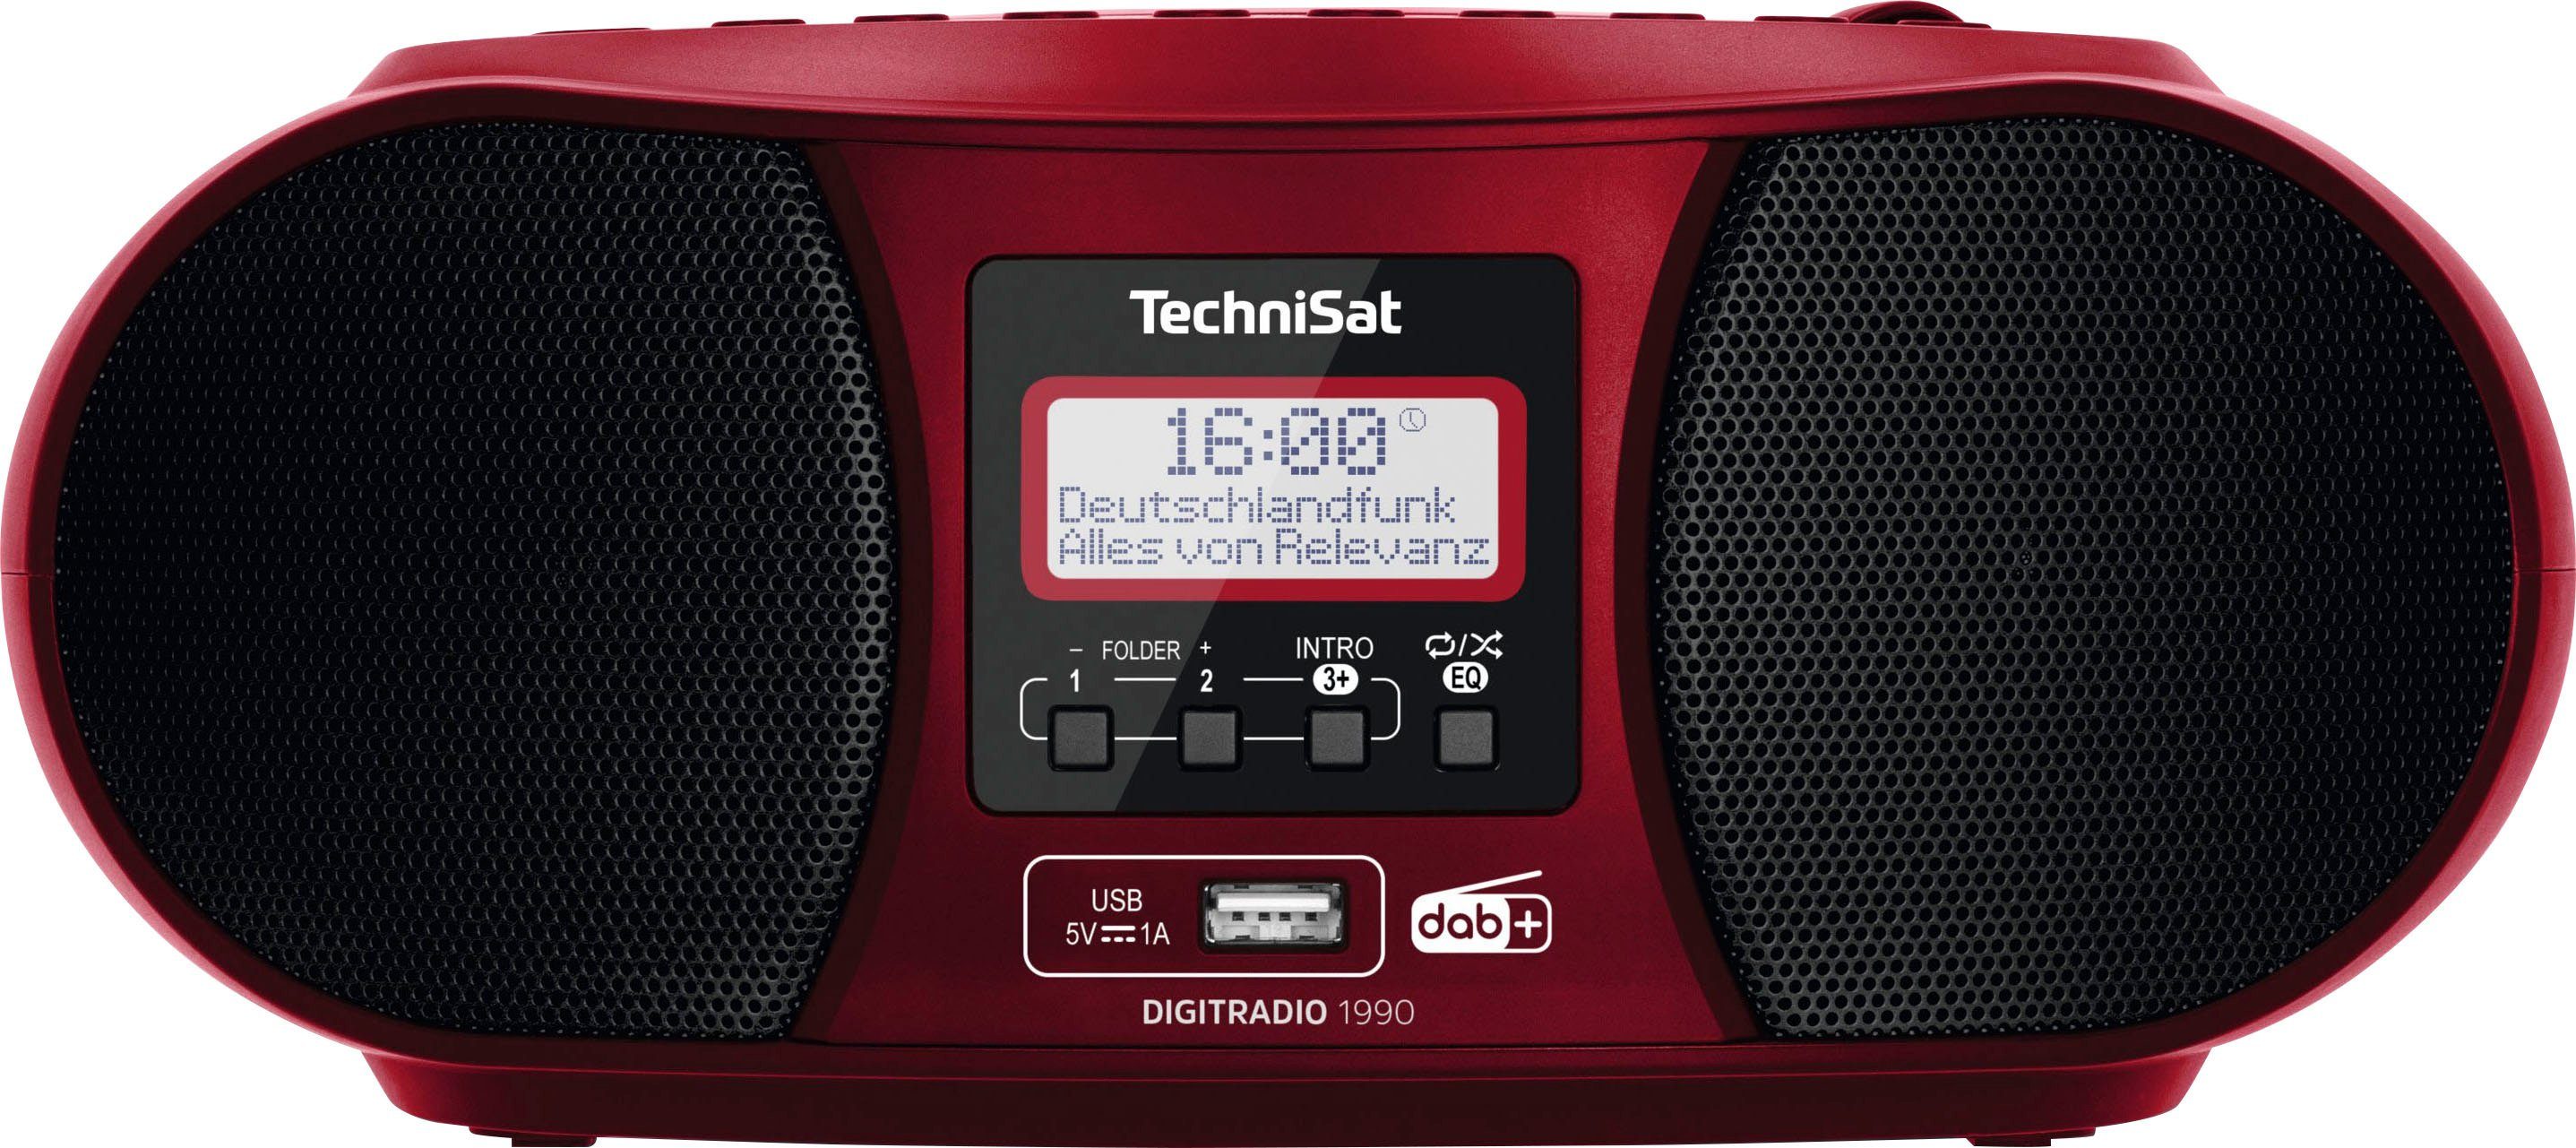 TechniSat Digitale radio (dab+) DIGITRADIO 1990